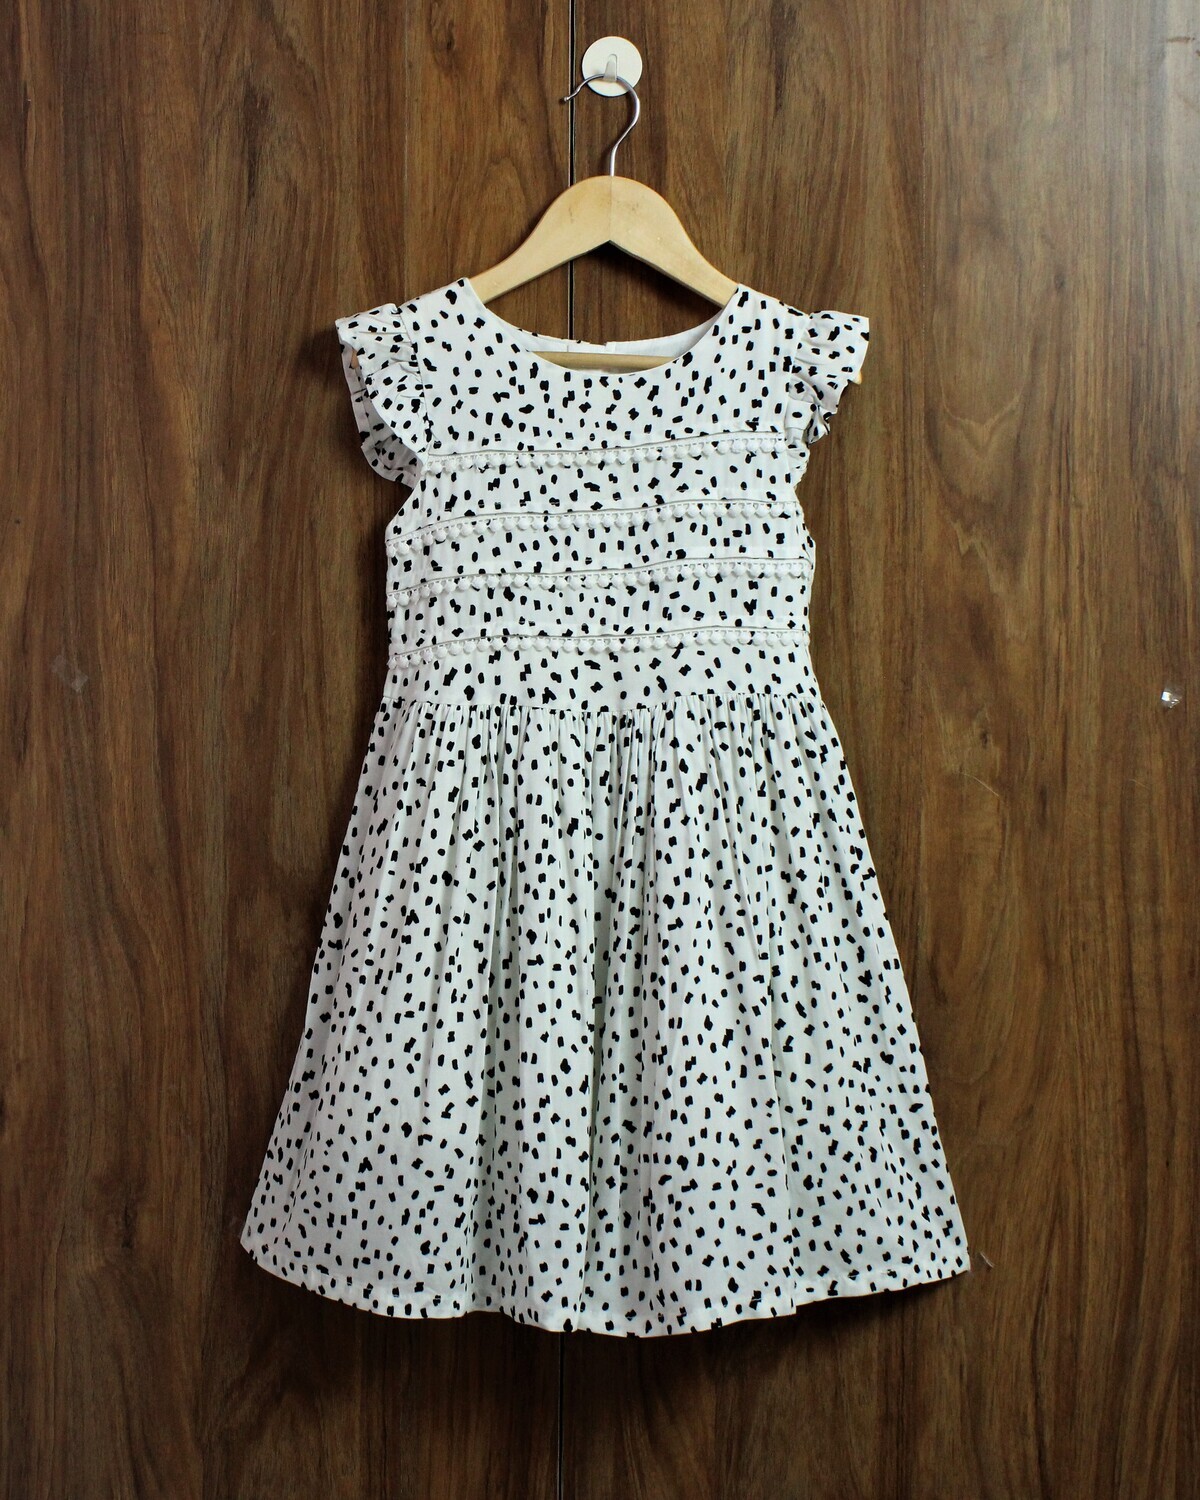 Polka dot soft dress(4 to 12 Yr.)